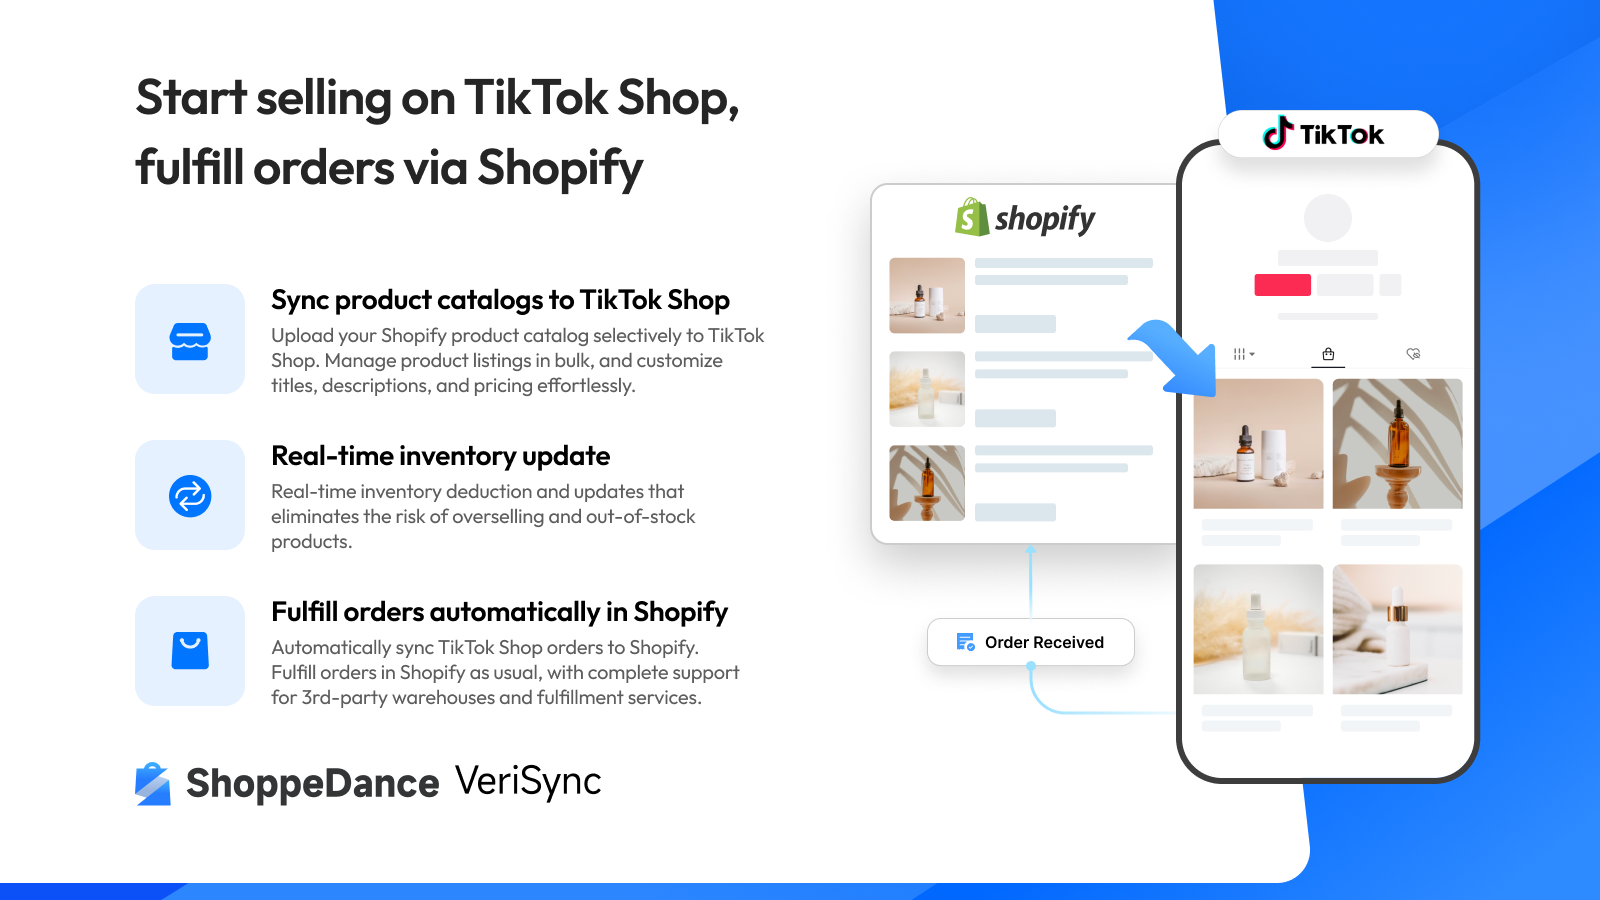 Start selling on TikTok Shop, fulfill orders via Shopify